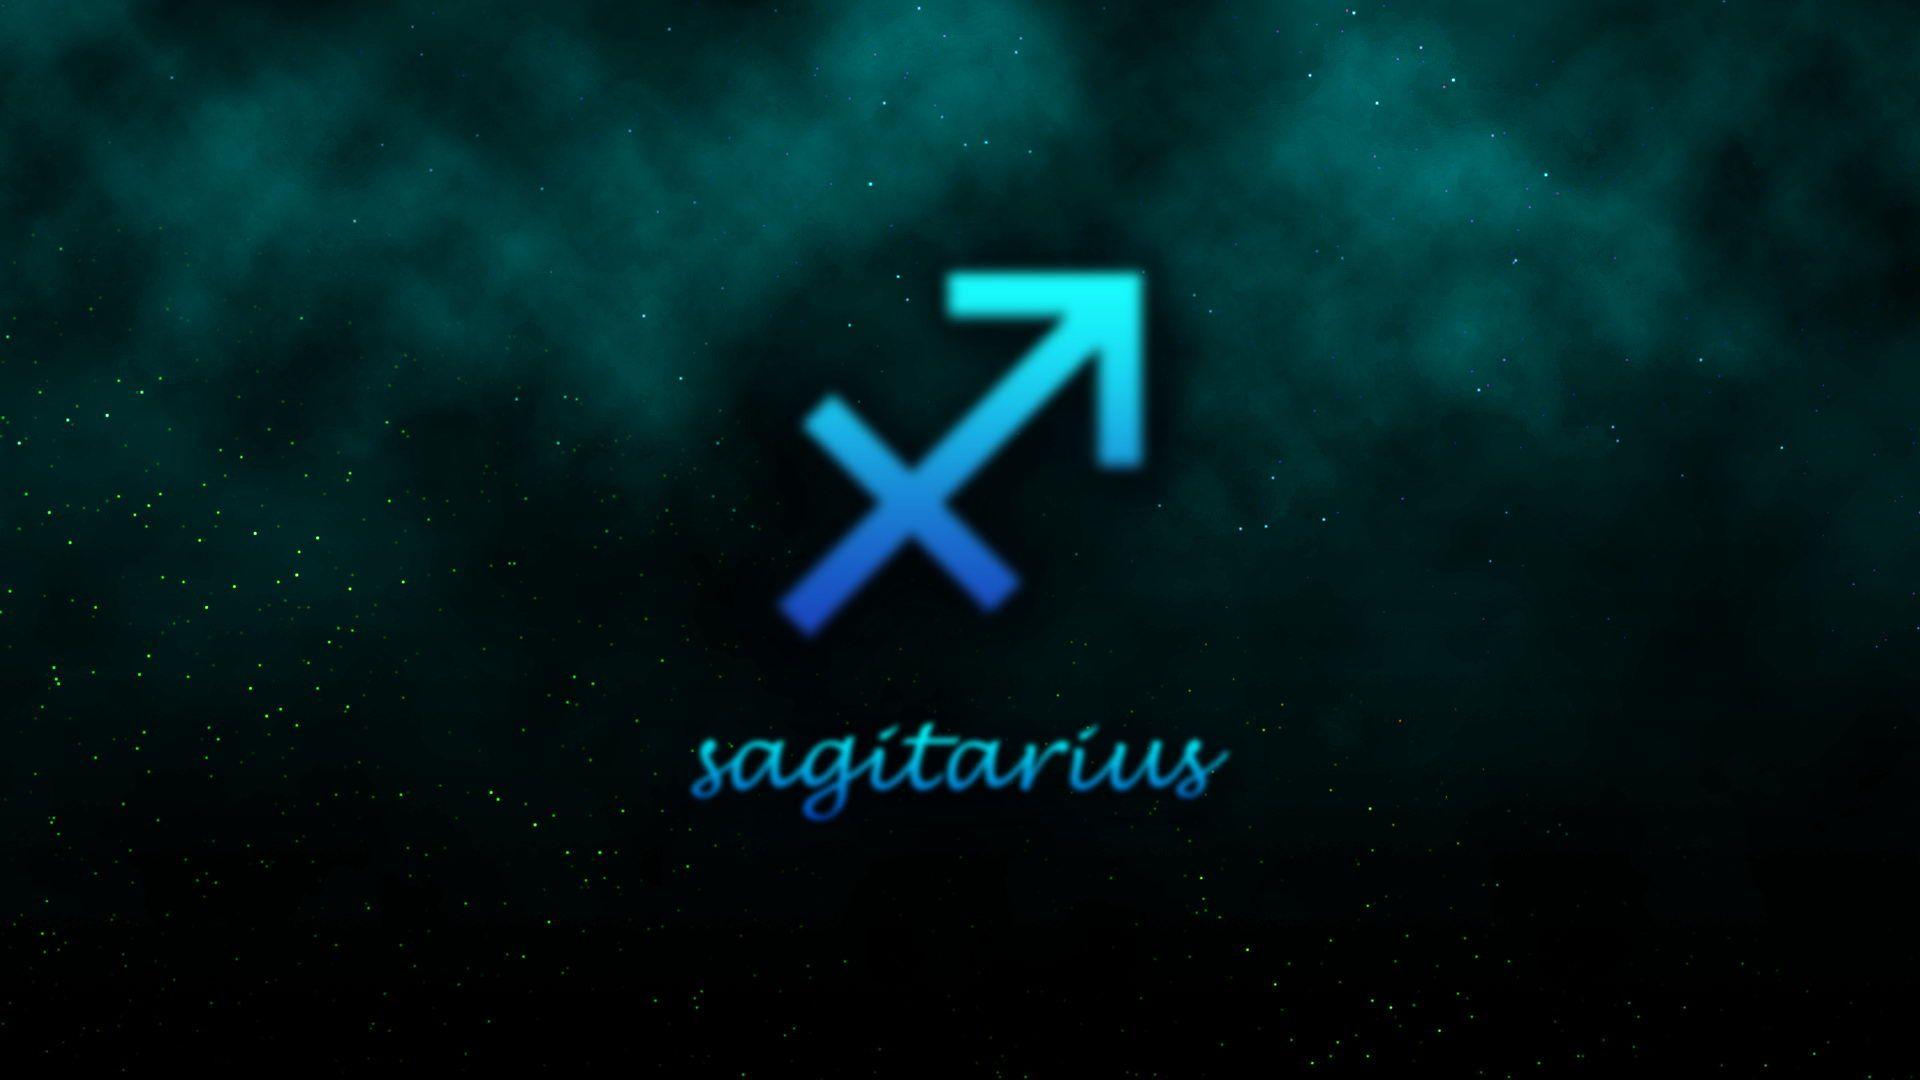 Sagittarius Wallpapers 73 images